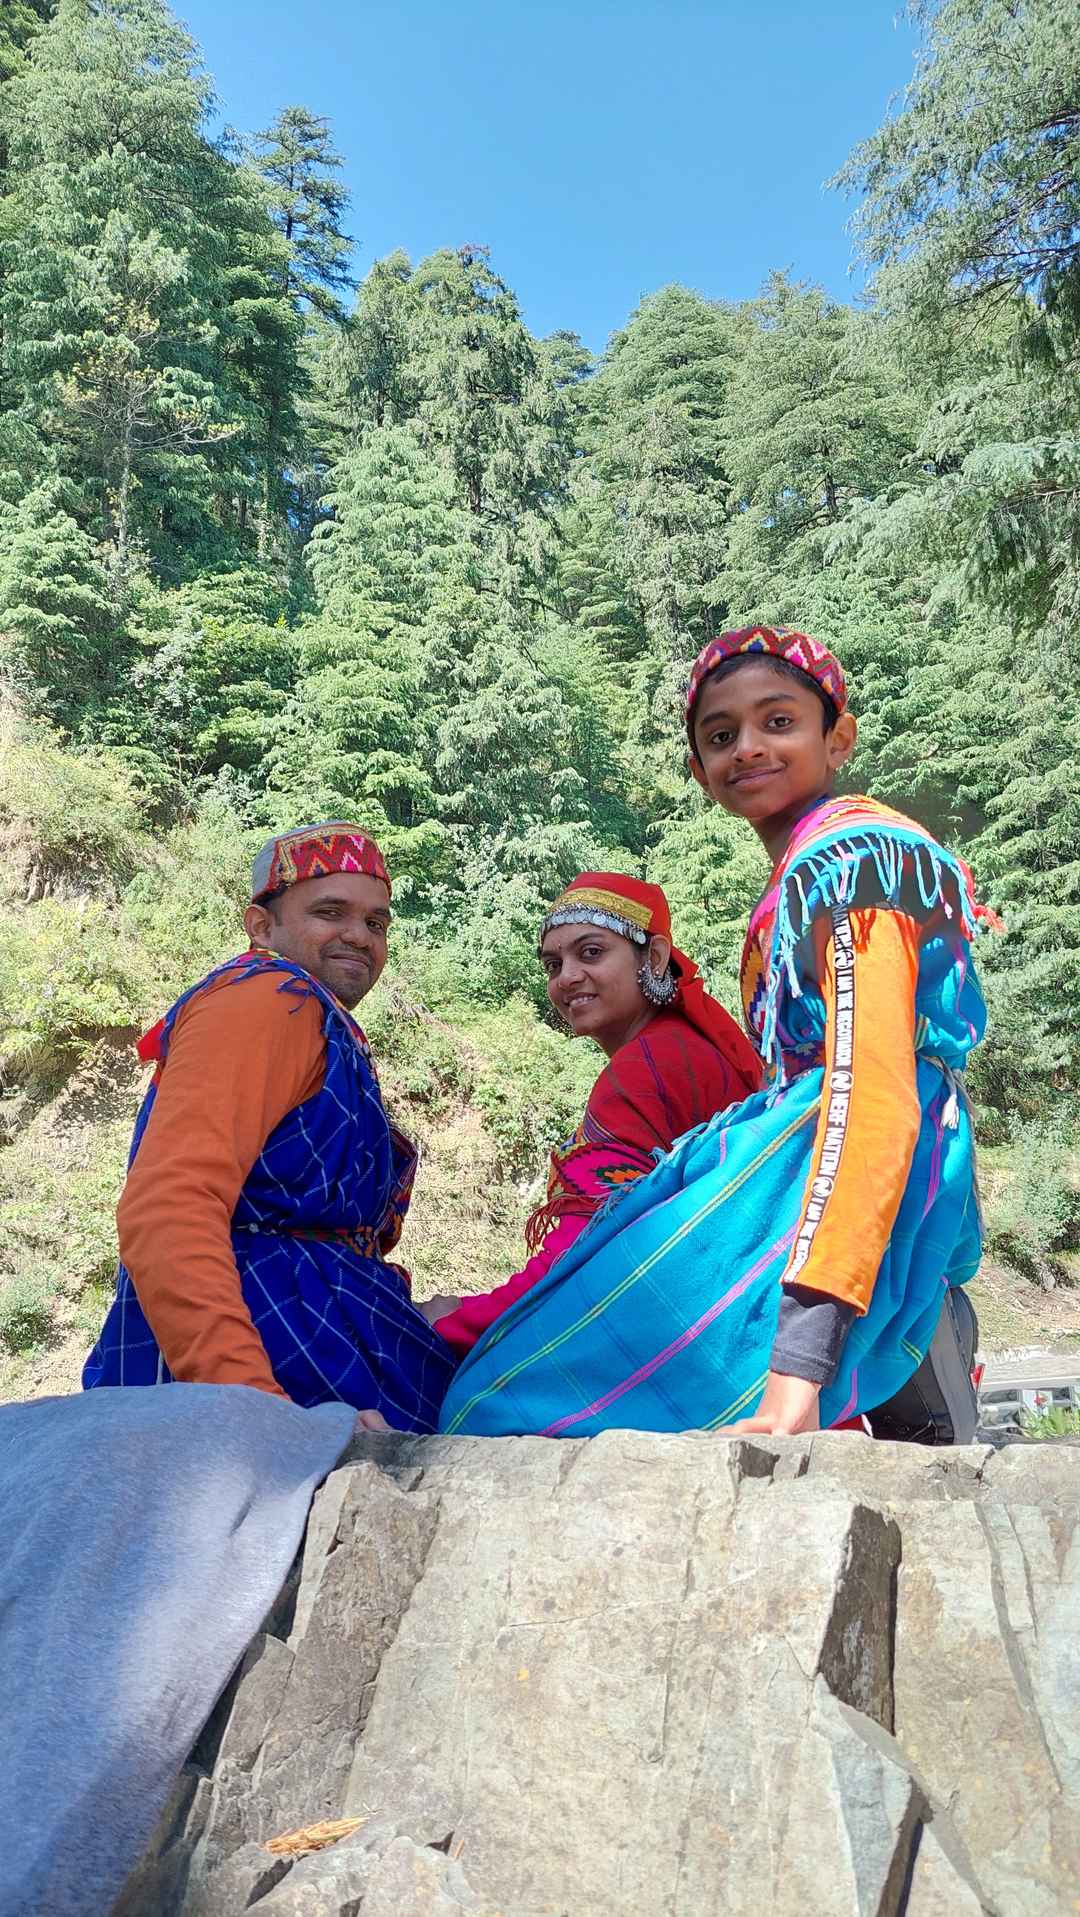 What will women wear in Himachal Pradesh? - Quora